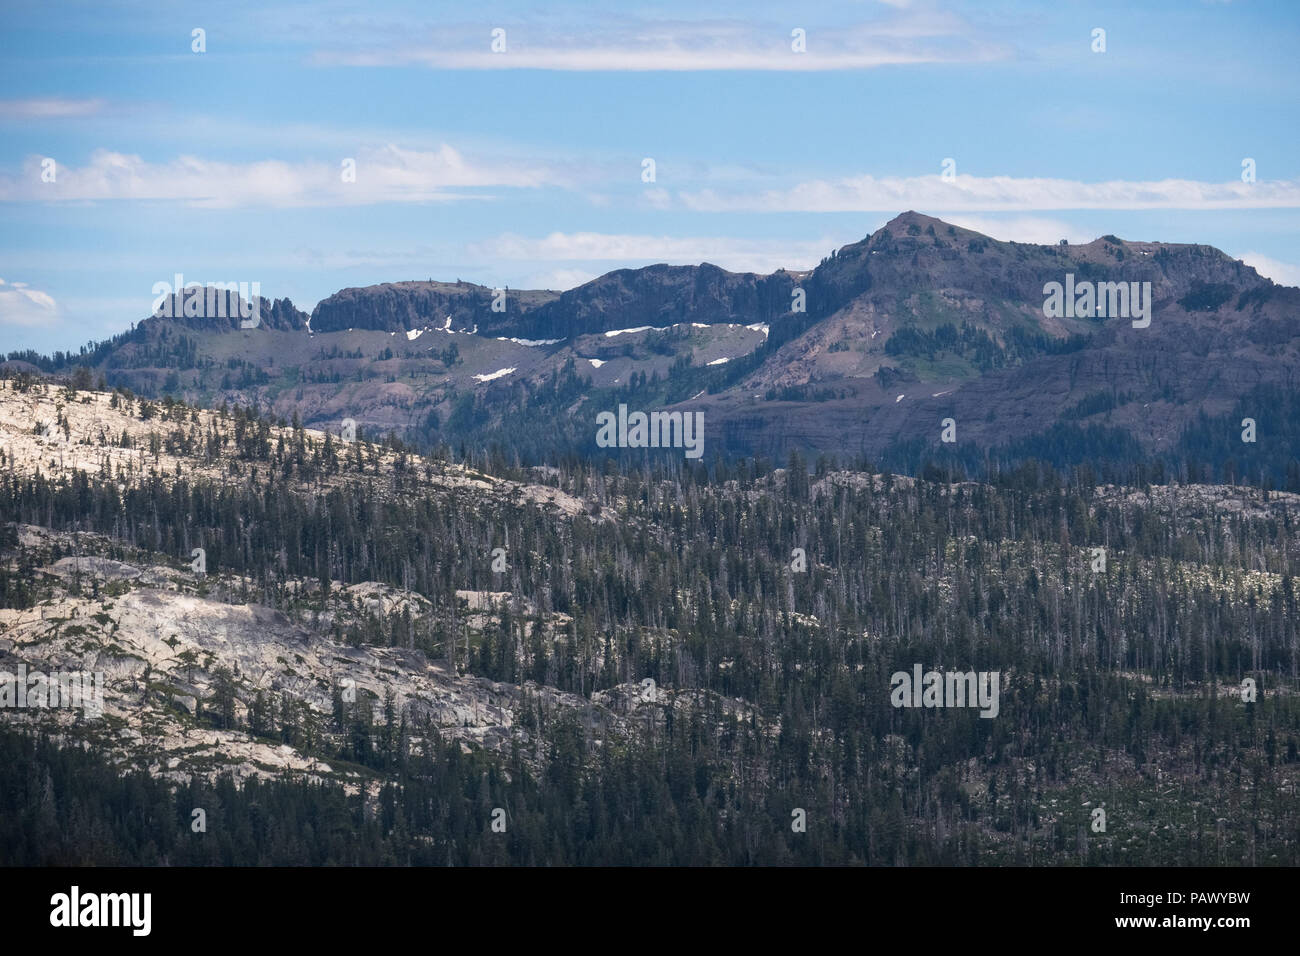 Bull Run Peak, taken from far away at Cape Horn along Mountain Highway 4, California Stock Photo